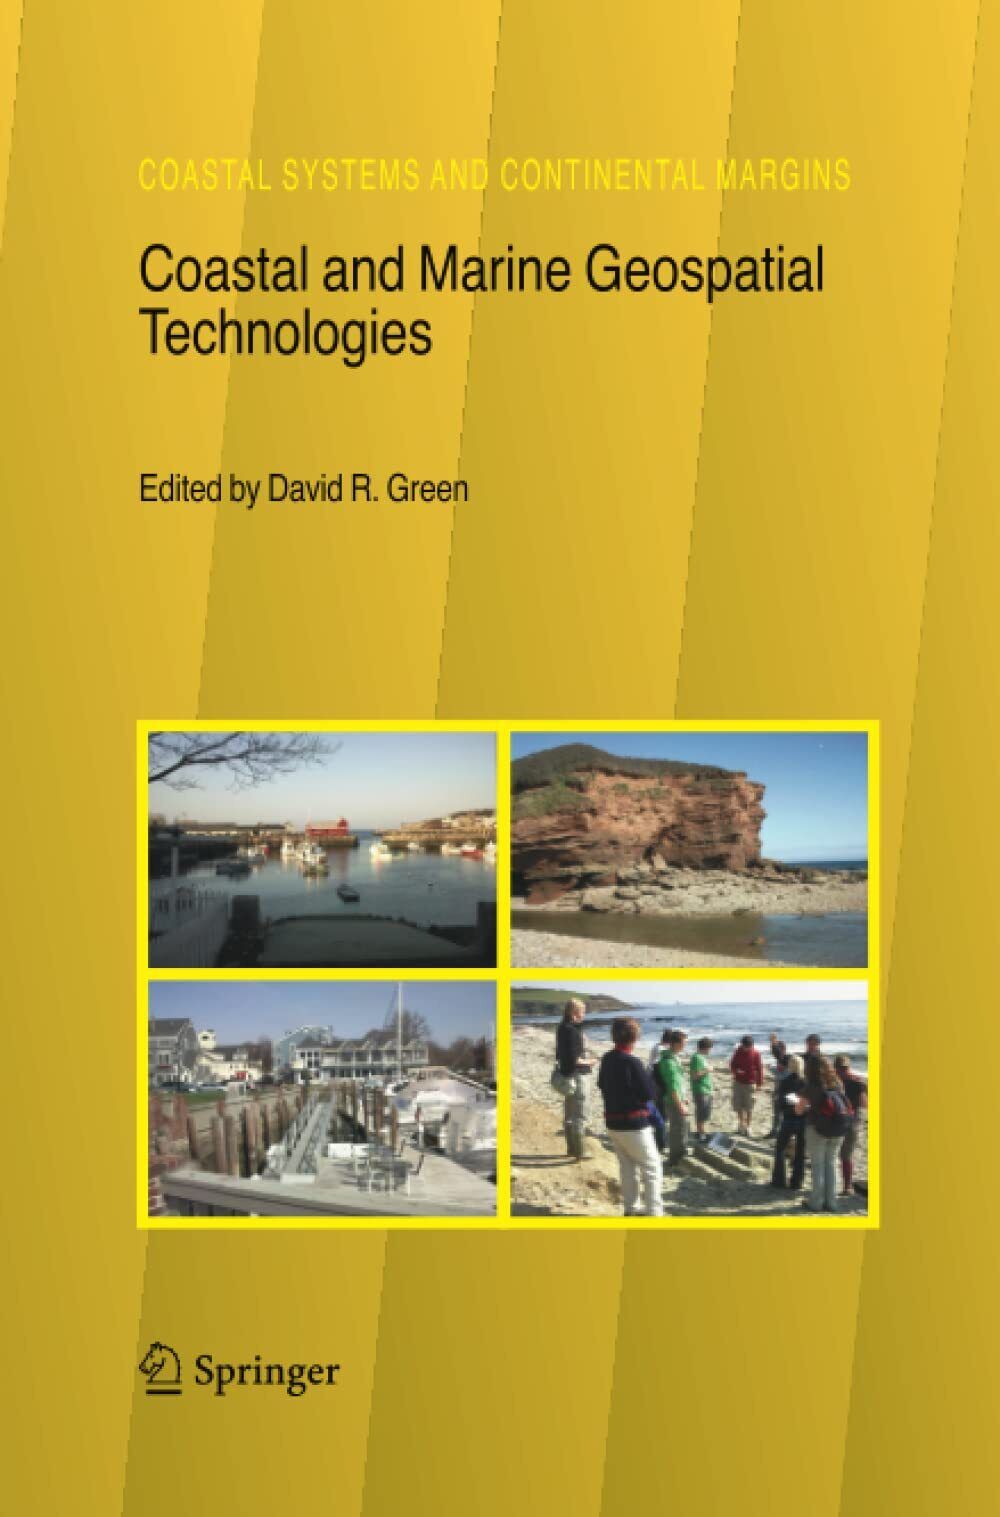 Coastal and Marine Geospatial Technologies - D.R. Green - Springer, 2012 libro usato